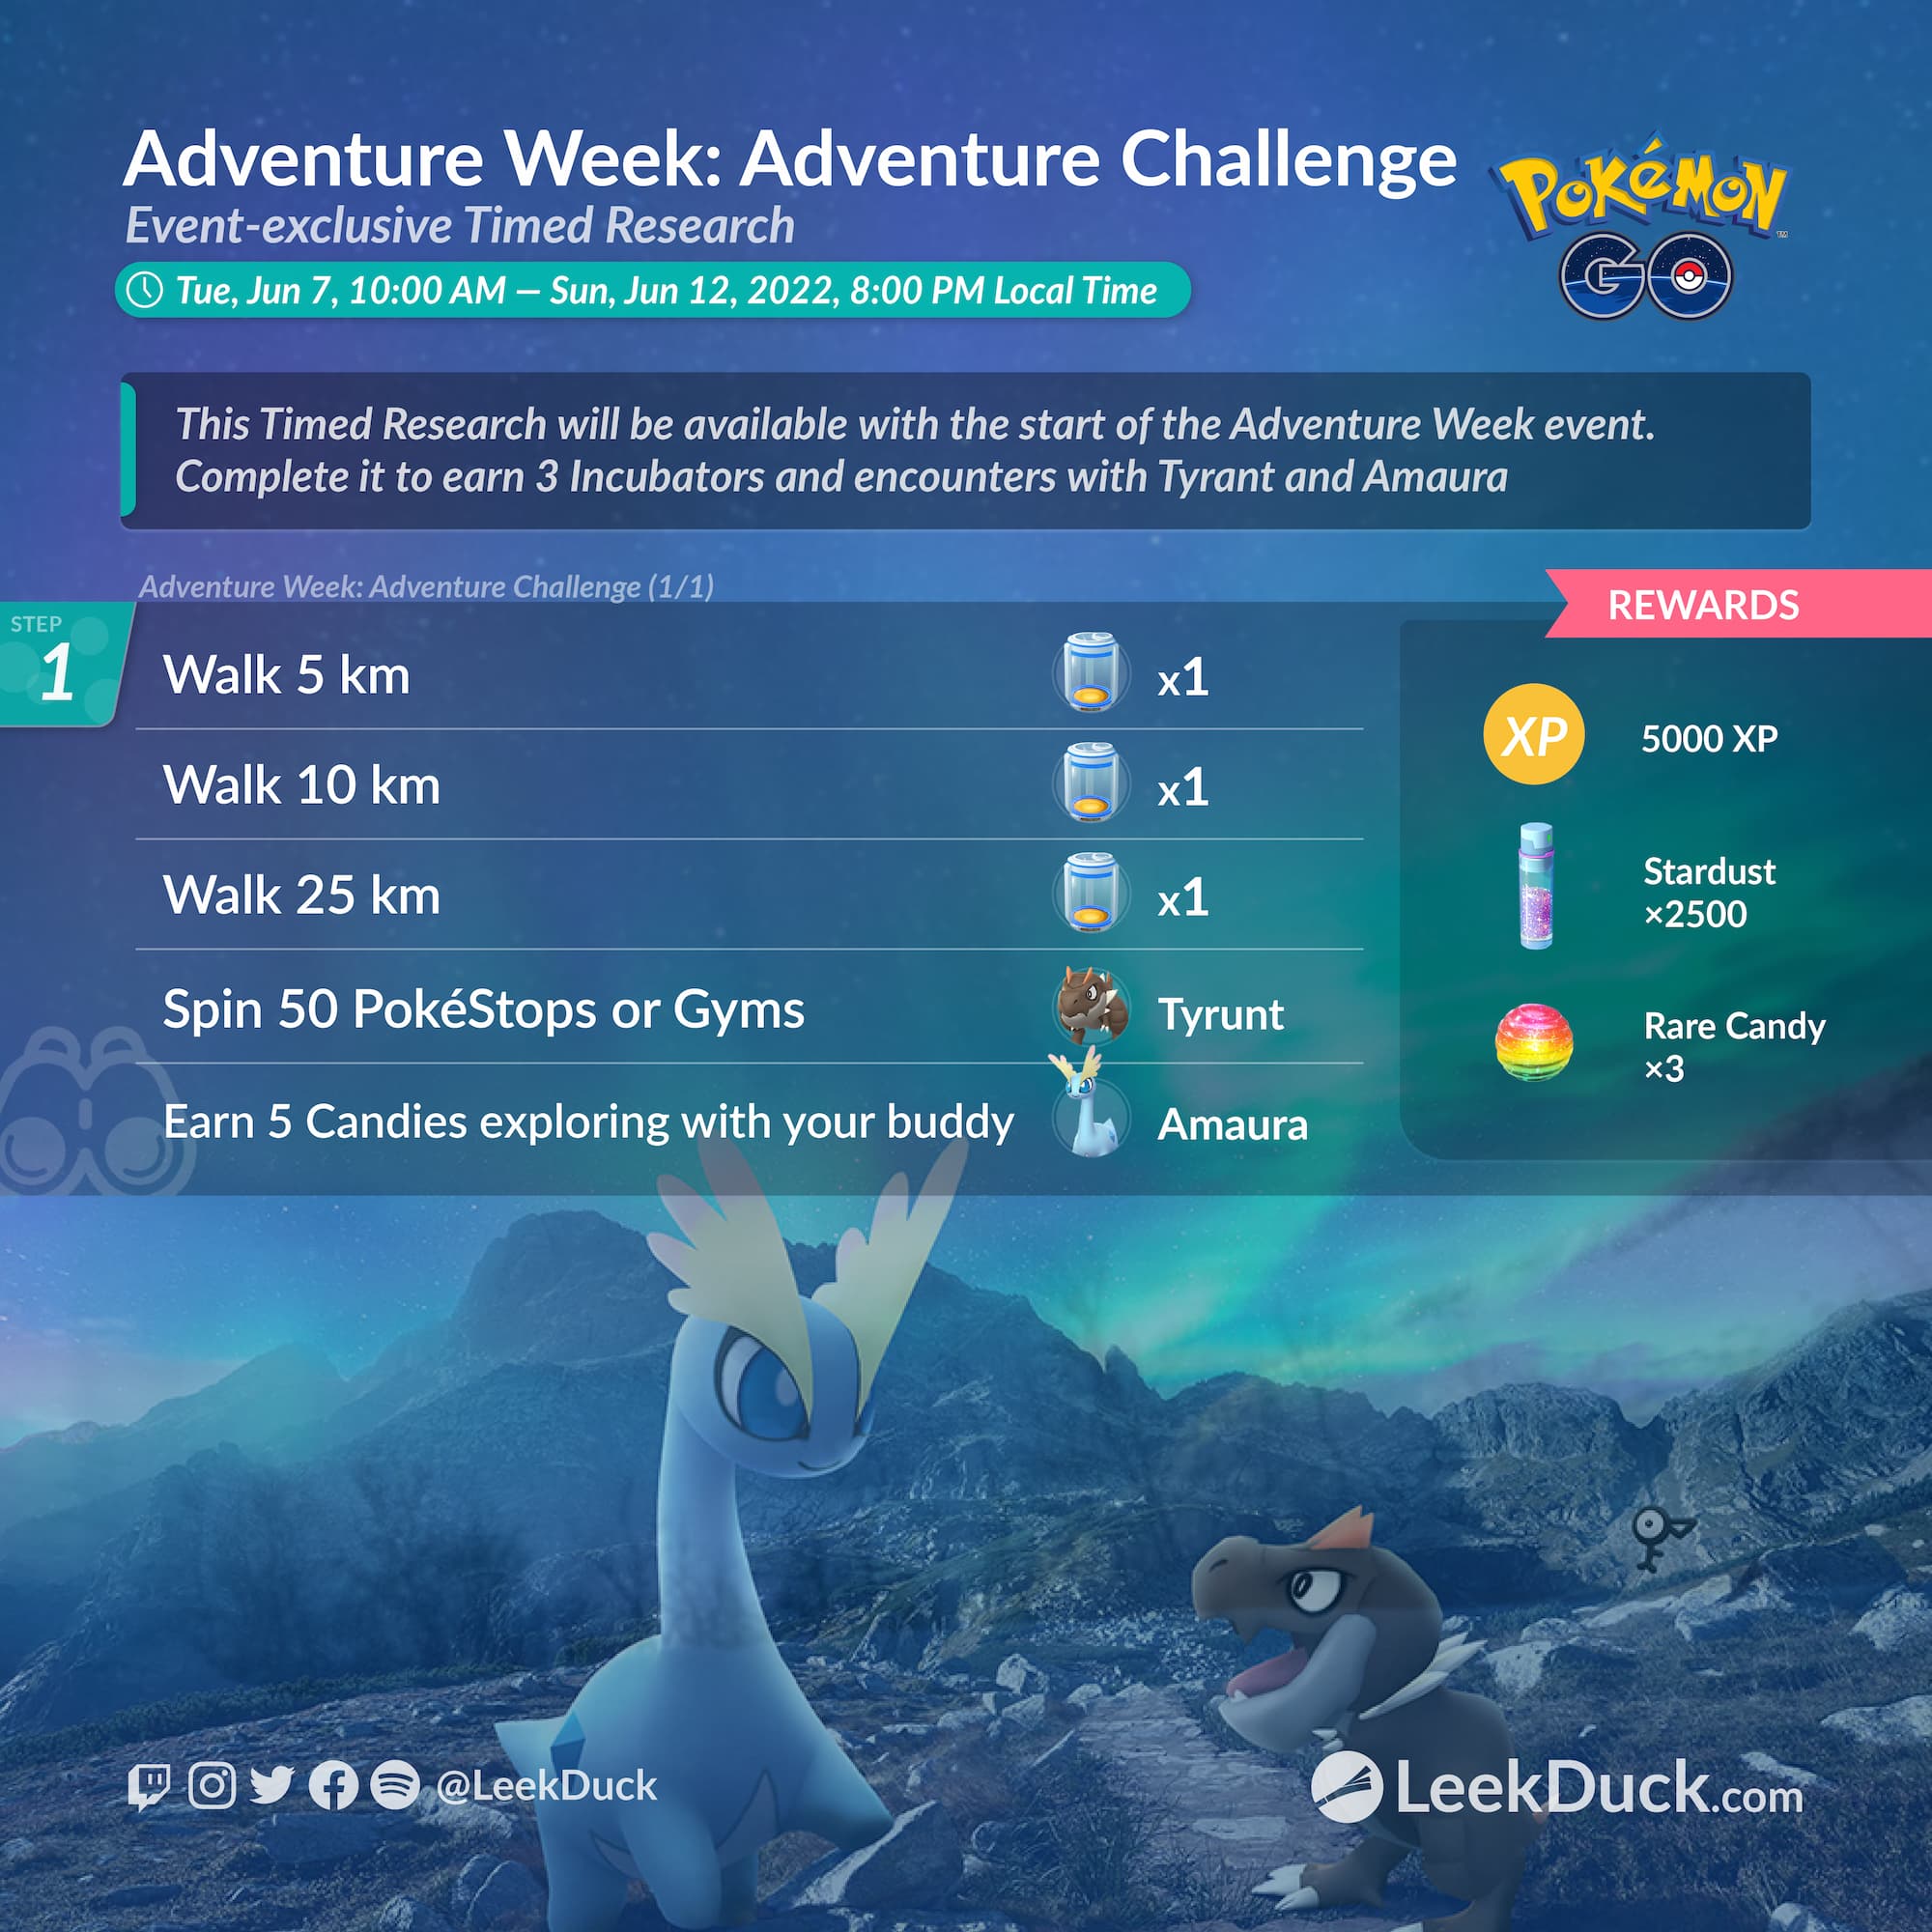 Adventure Week 2022 Leek Duck Pokémon GO News and Resources